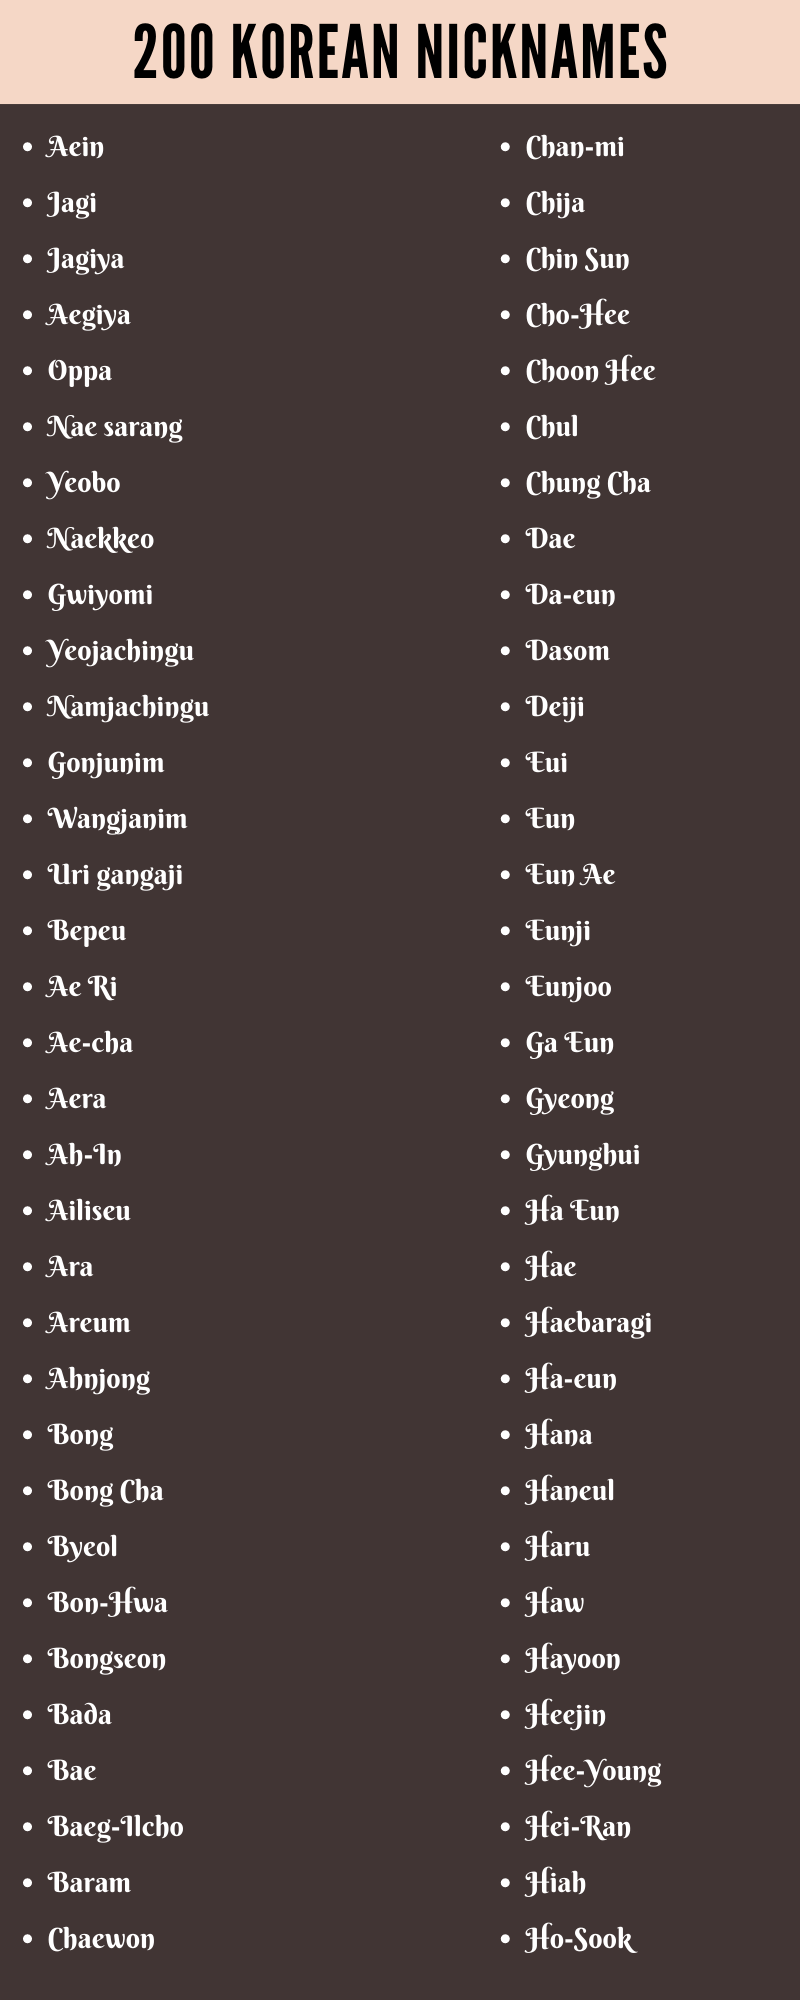 Korean Nicknames